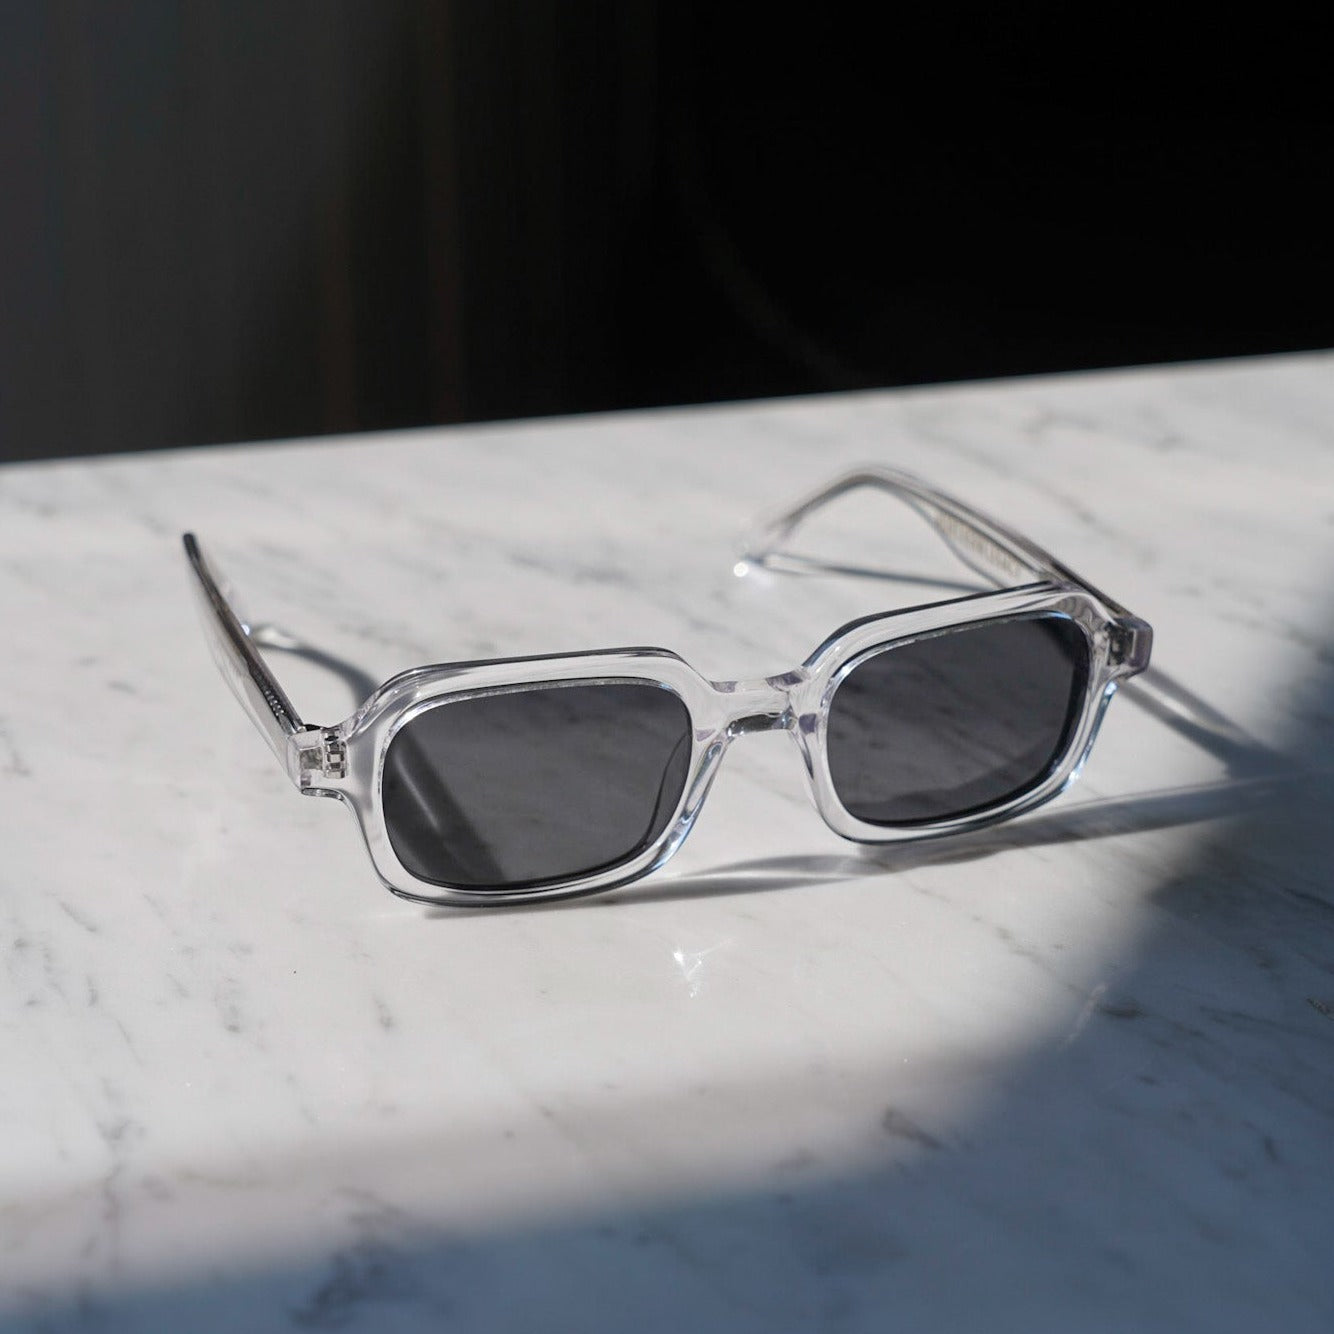 Modern sunglasses - Transparent grey